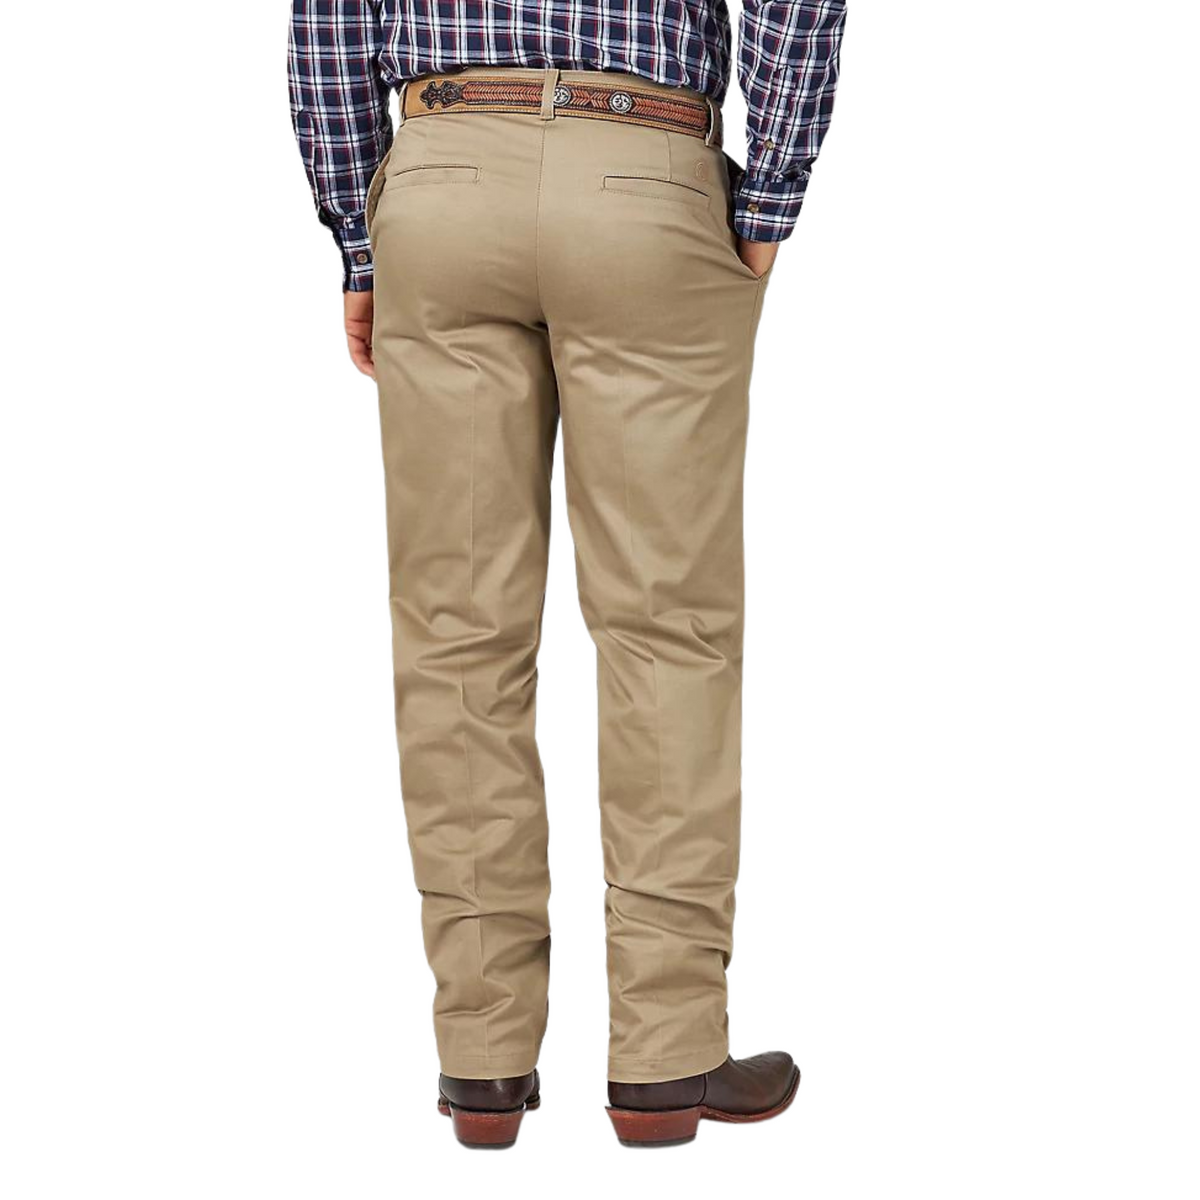 Men's Wrangler Riata Flat Front Khaki Pants